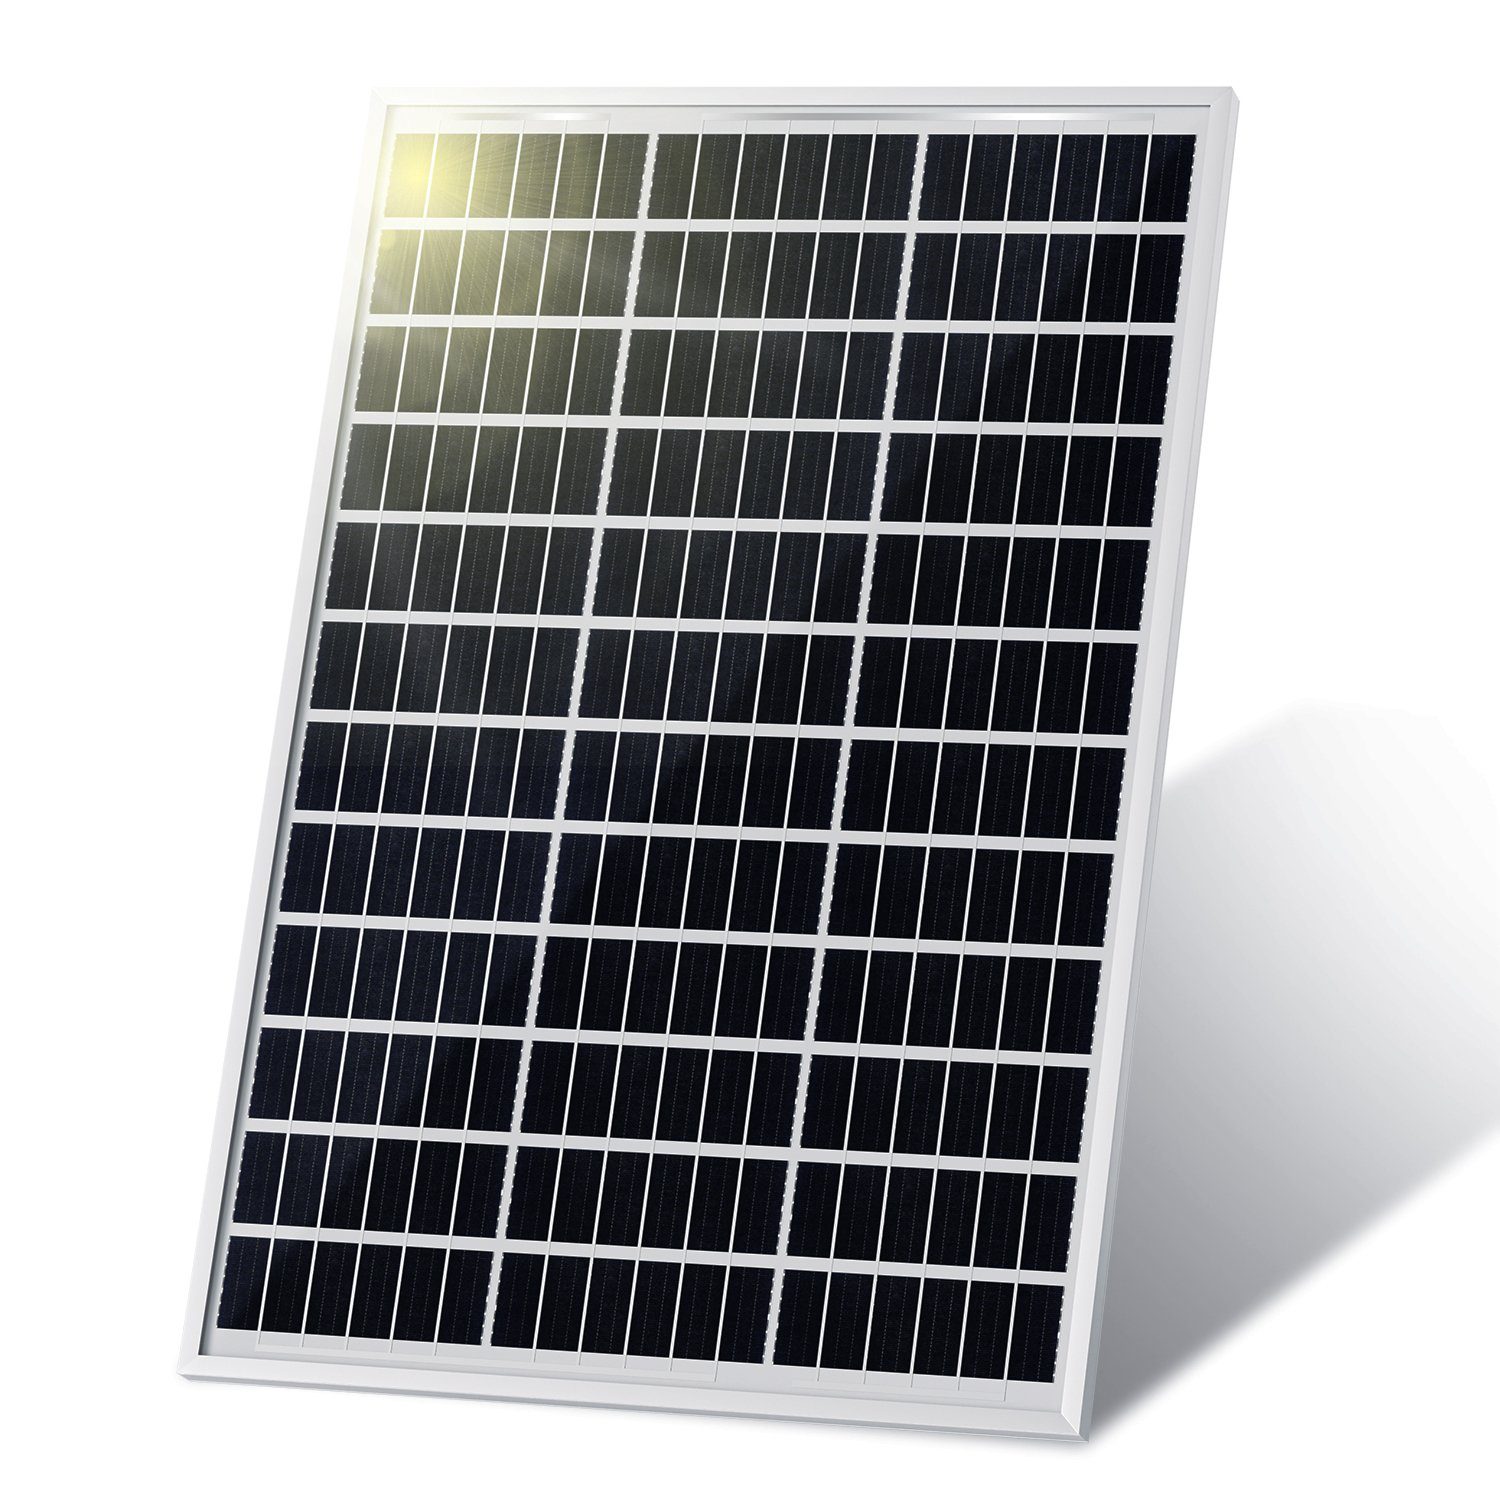 Gimisgu Solaranlage Solarpanel 100W für Powerstation, Solarmodul, Solarladegerät, 100 W